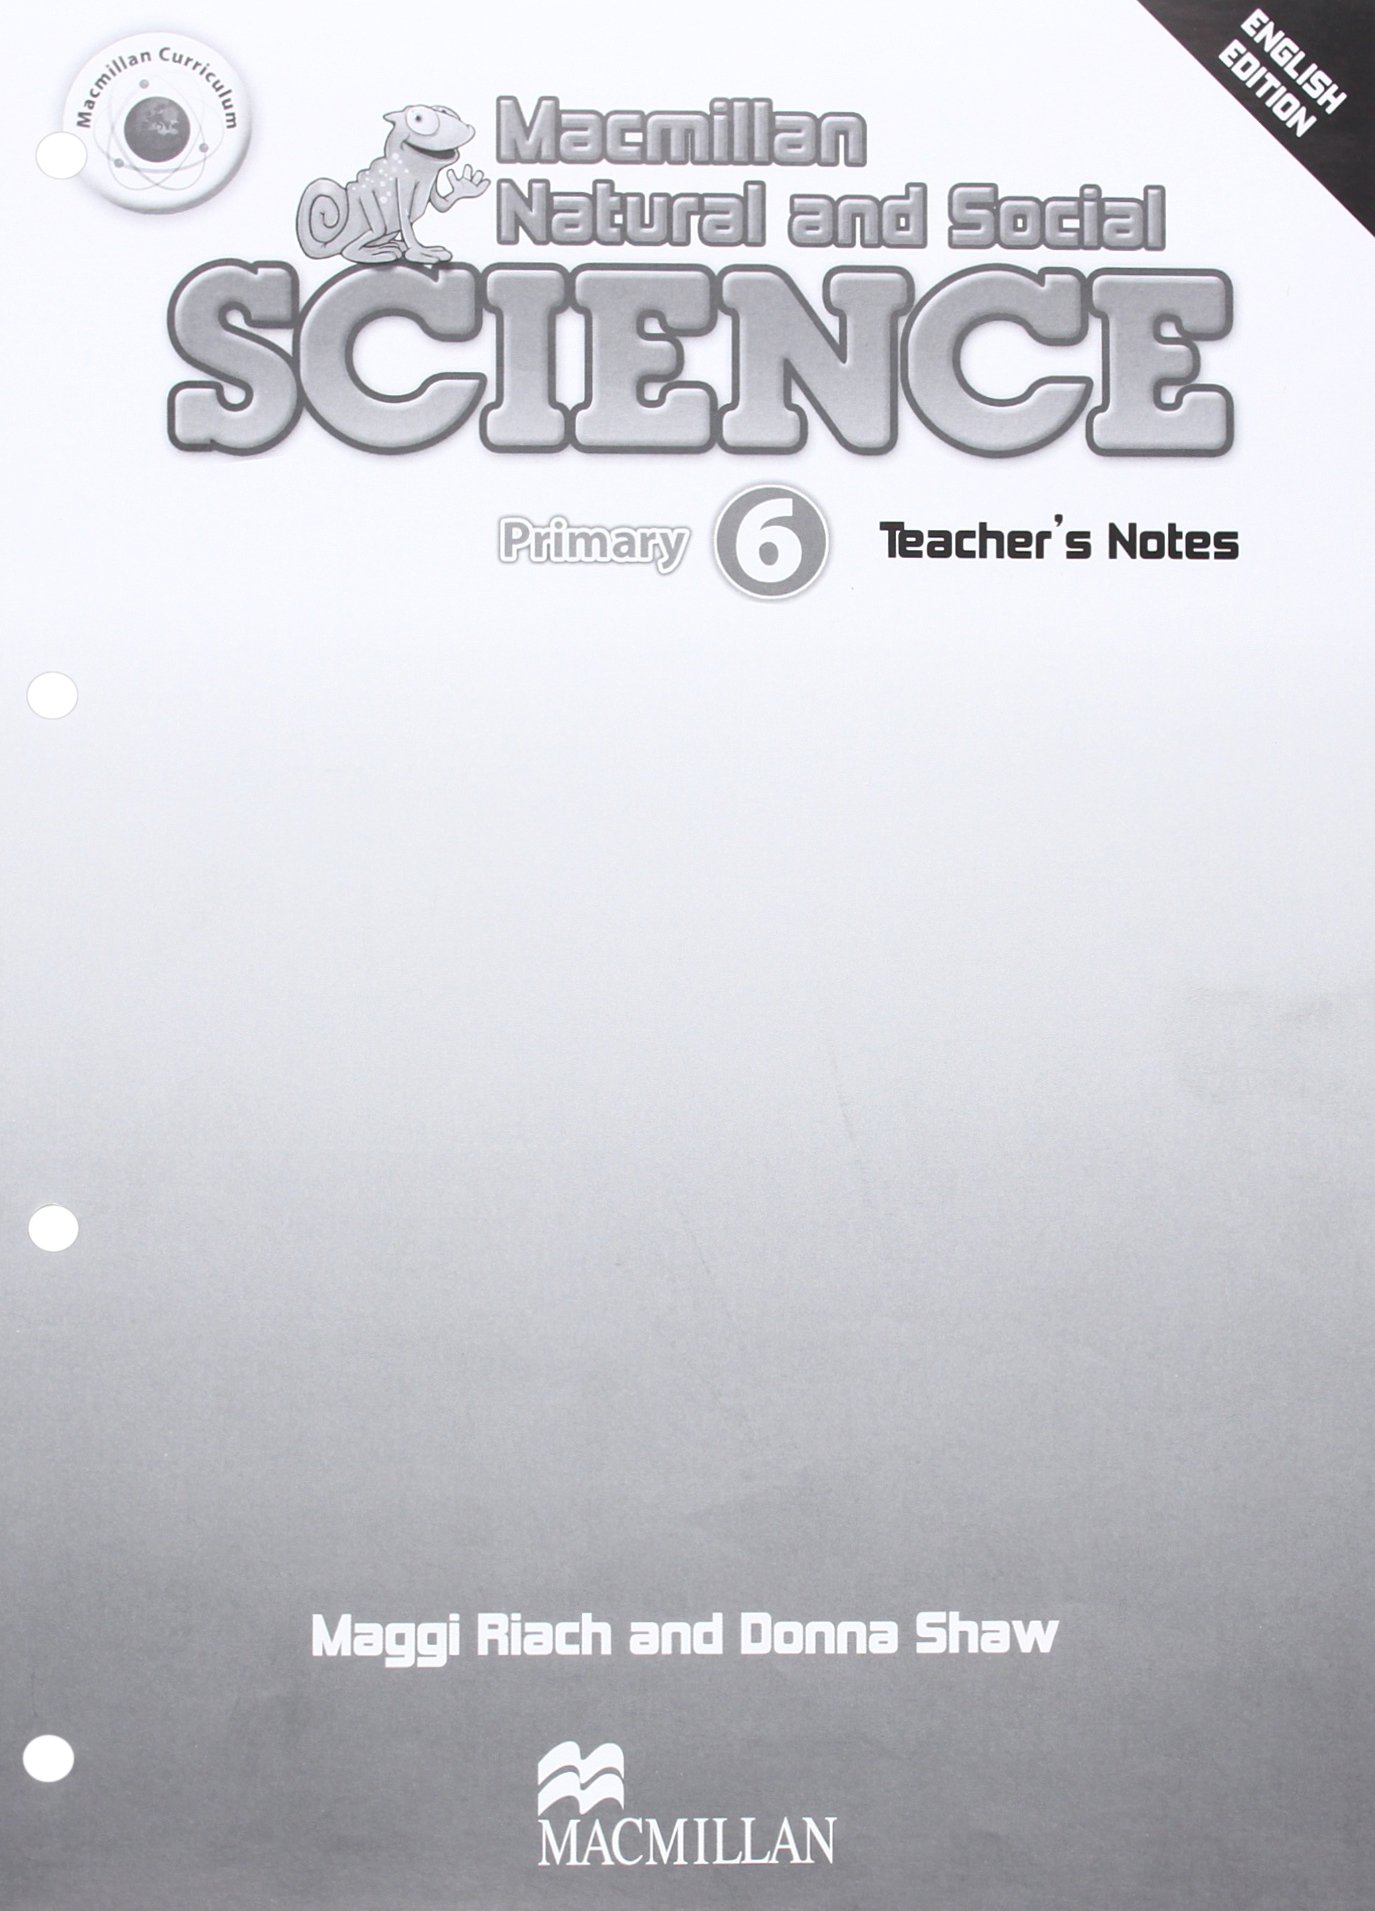 MACMILLAN NATURAL AND SOCIAL SCIENCE 6 Teacher's Notes